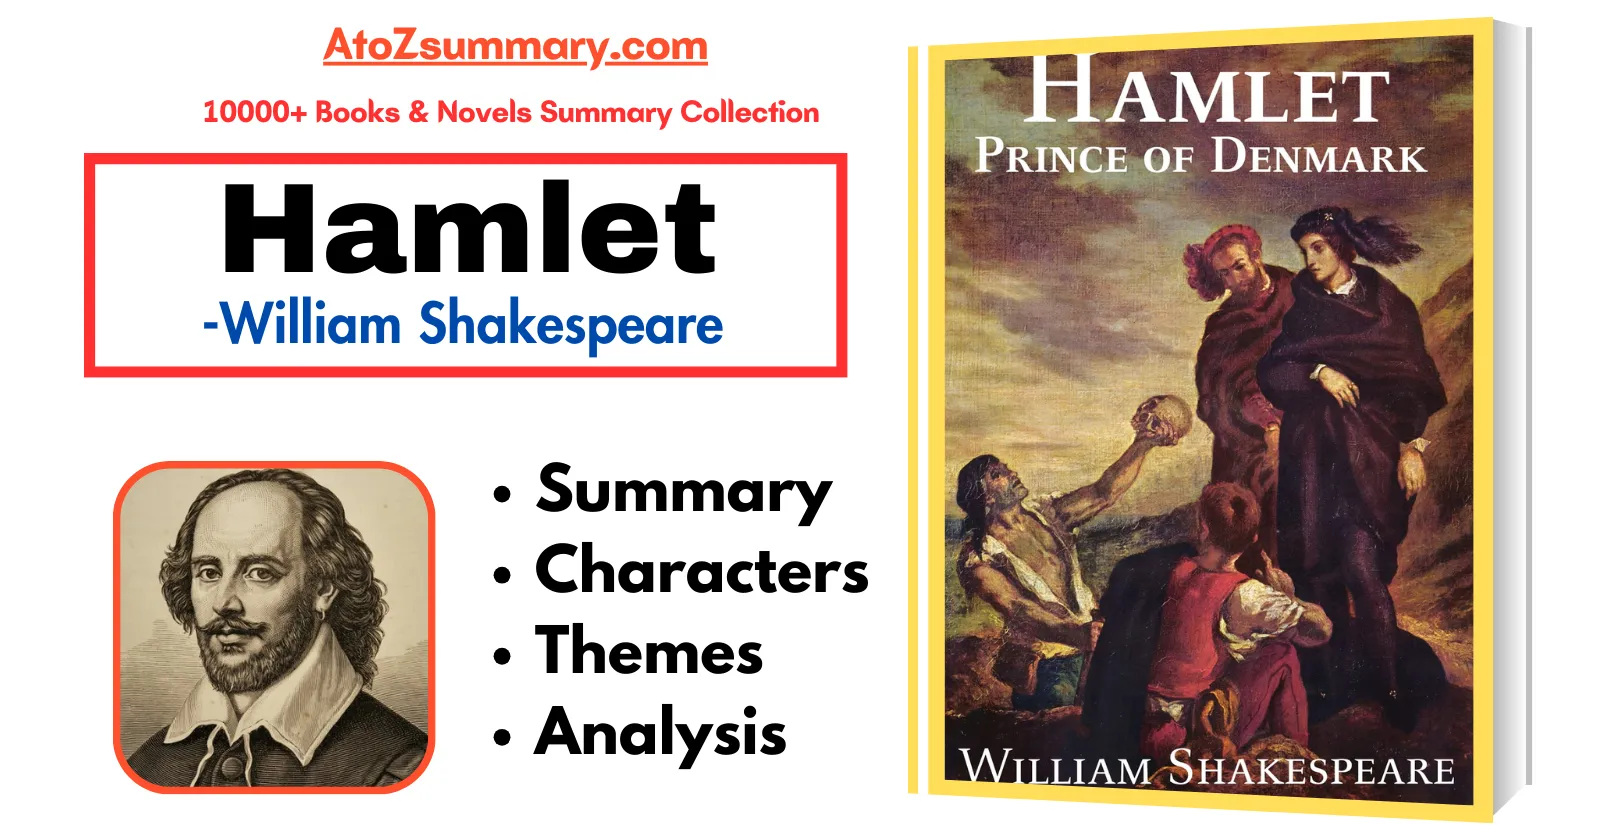 Hamlet Summary and Analysis